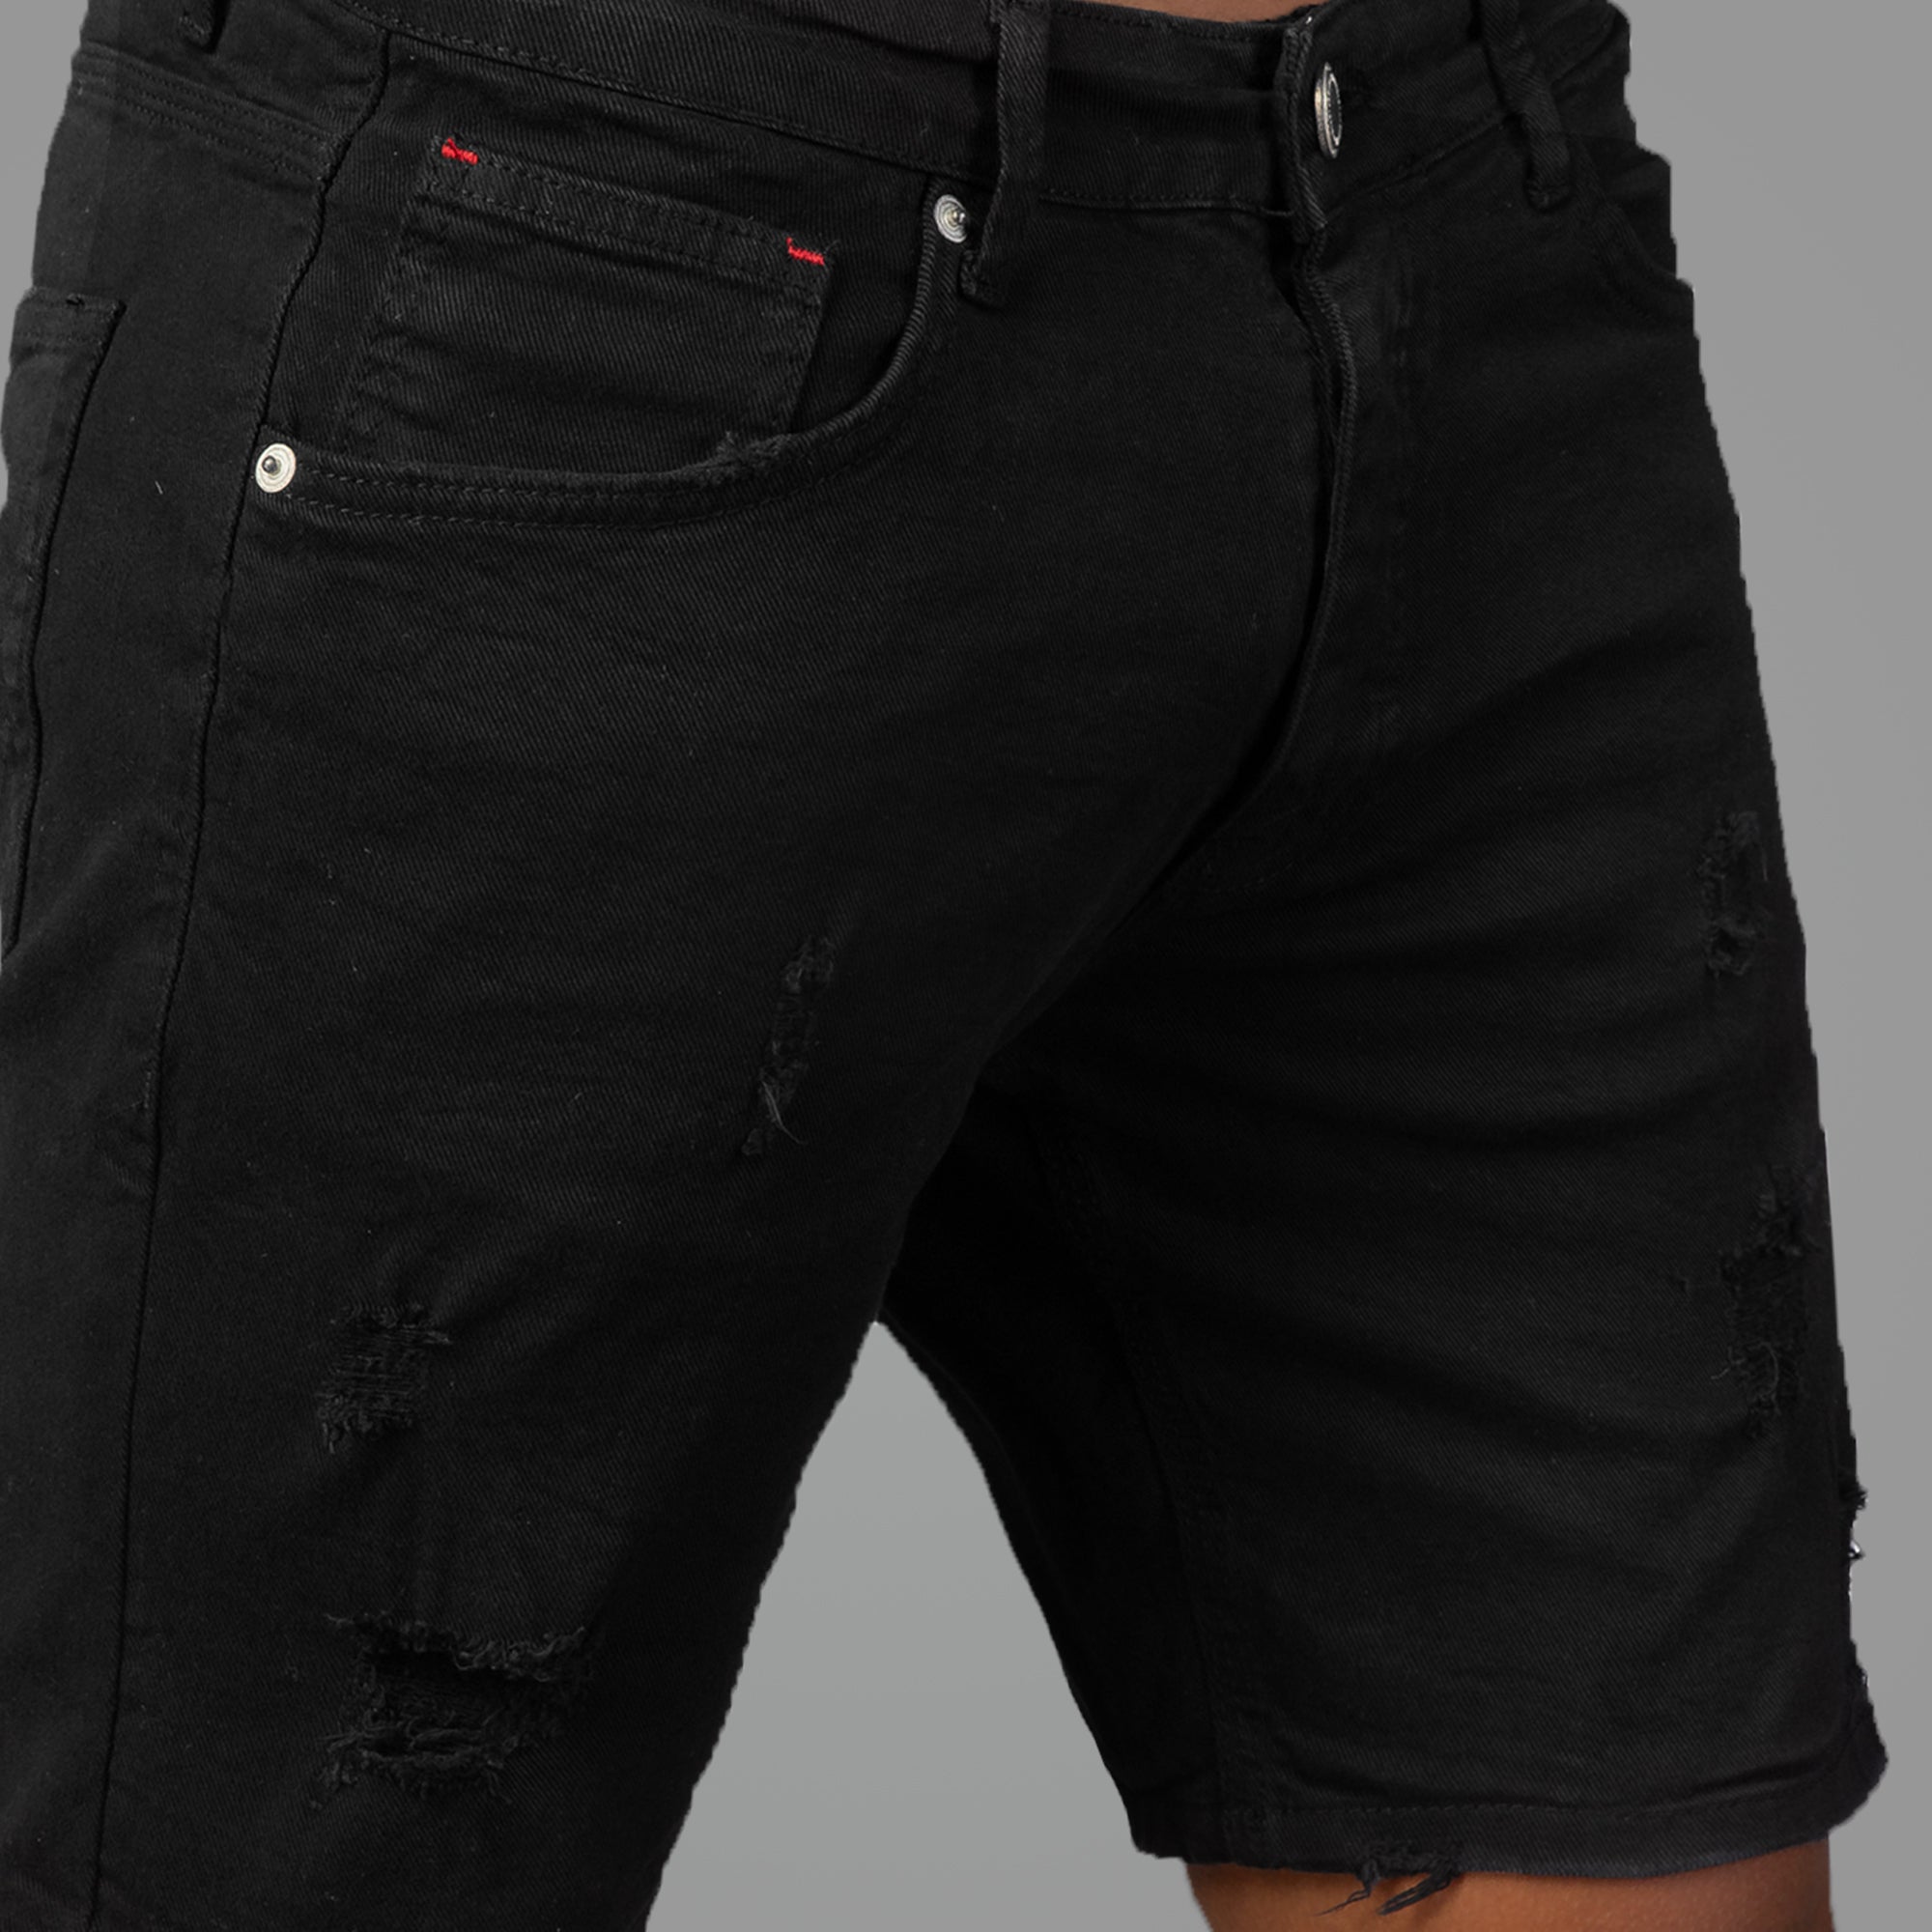 Black Jeans Shorts